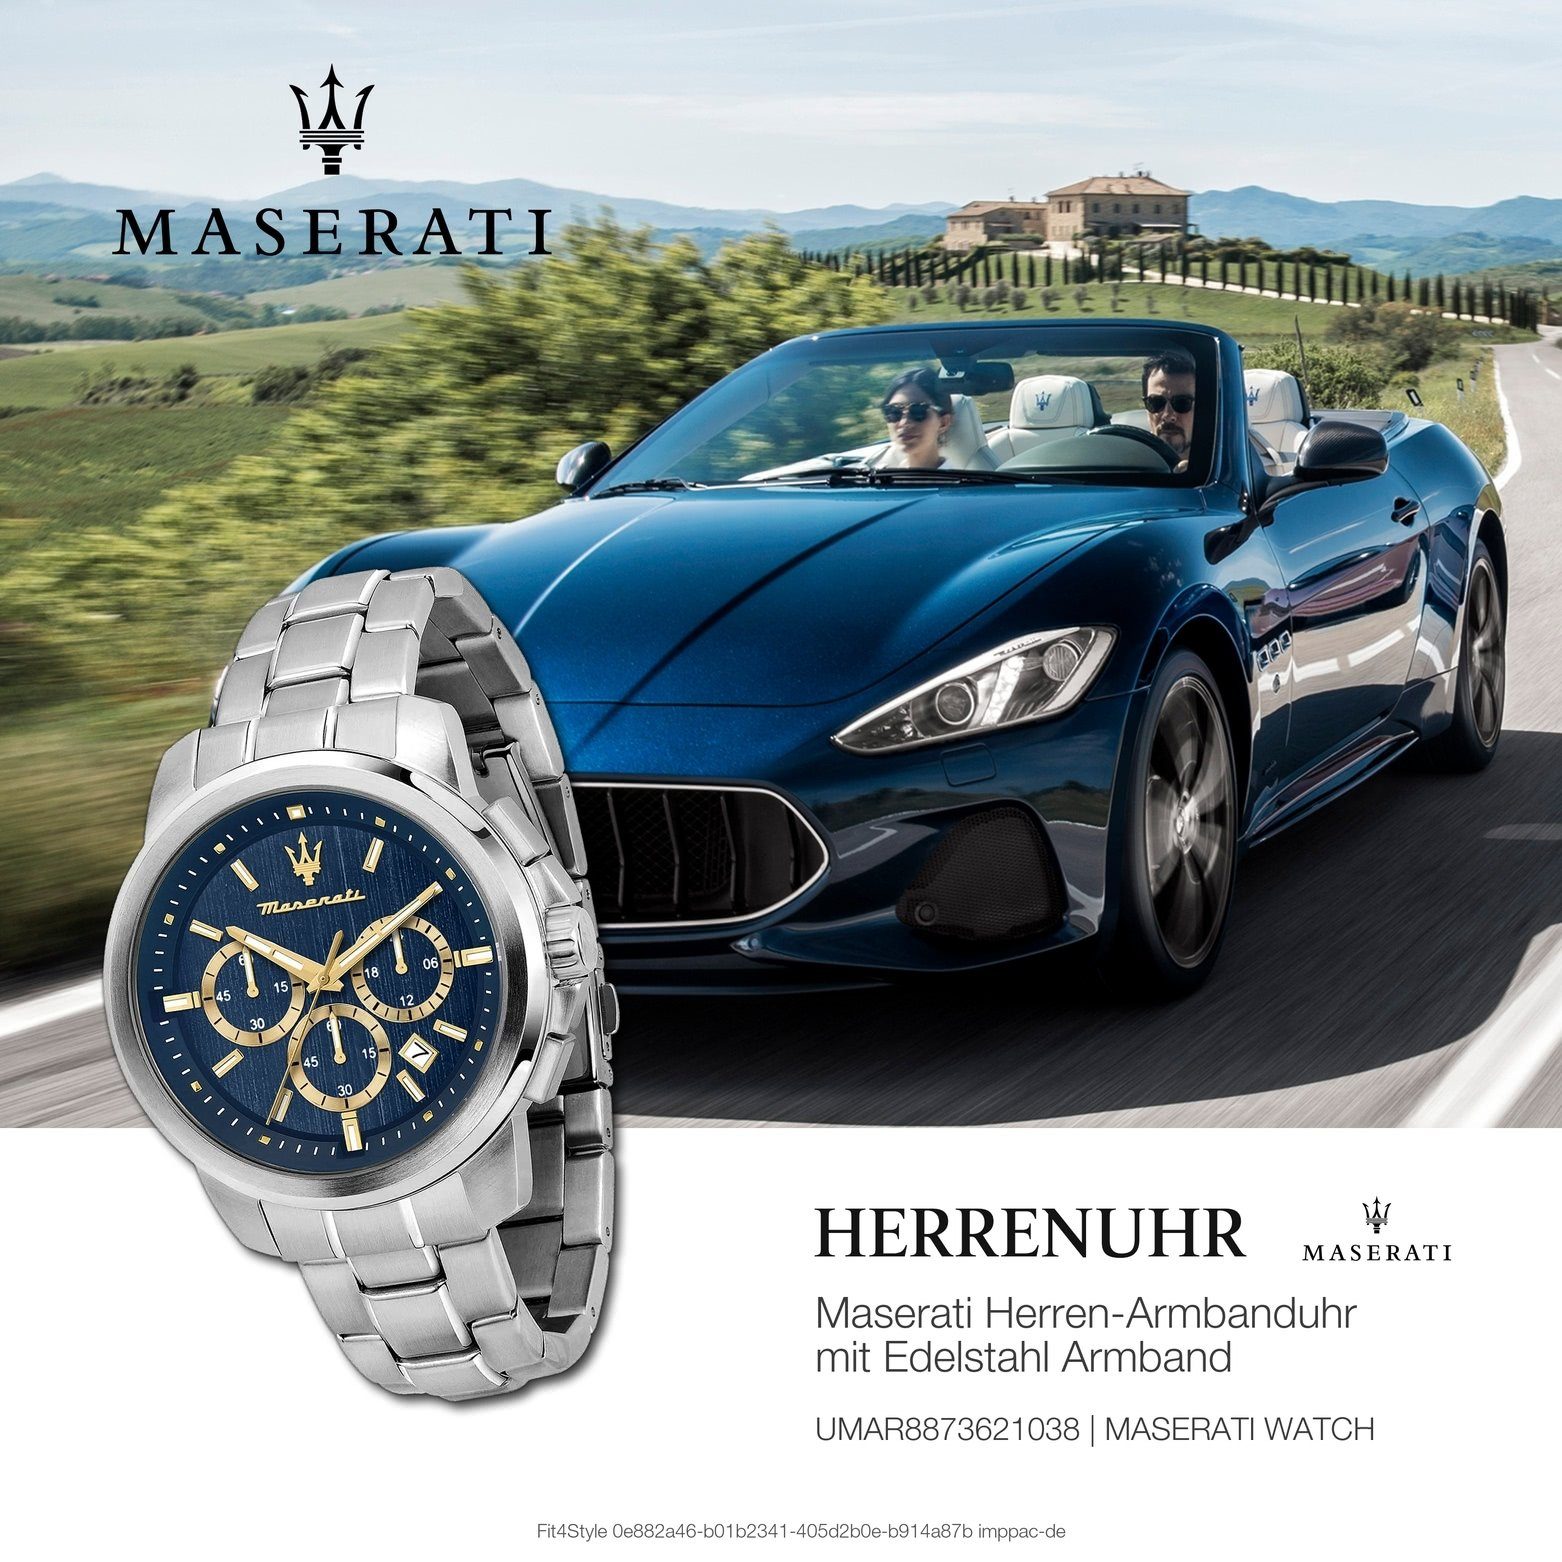 blau, Italy groß rund, gold, Herrenuhr silber Chronograph Herrenuhr MASERATI Edelstahlarmband, Successo 44mm) Made-In Maserati Chrono, (ca.